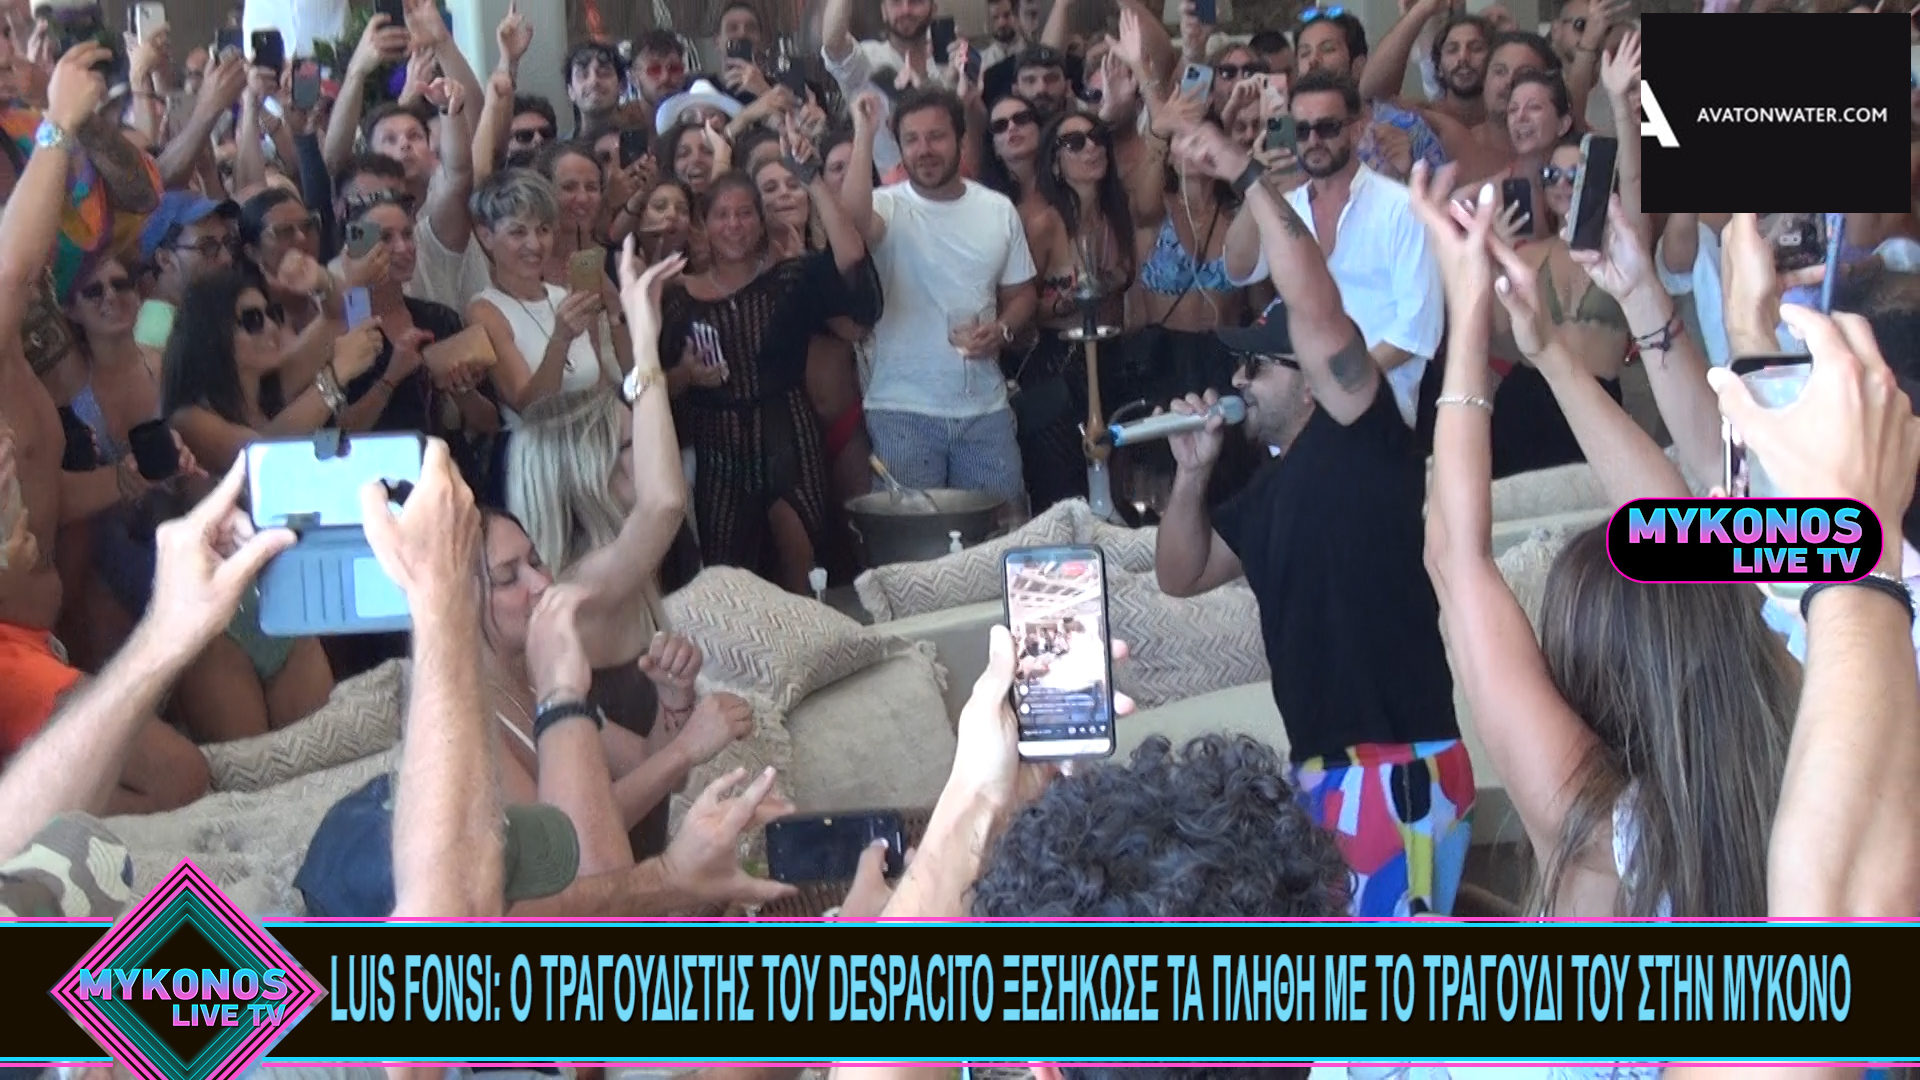 Popular Greek Singer Performs for the Rich on Mykonos